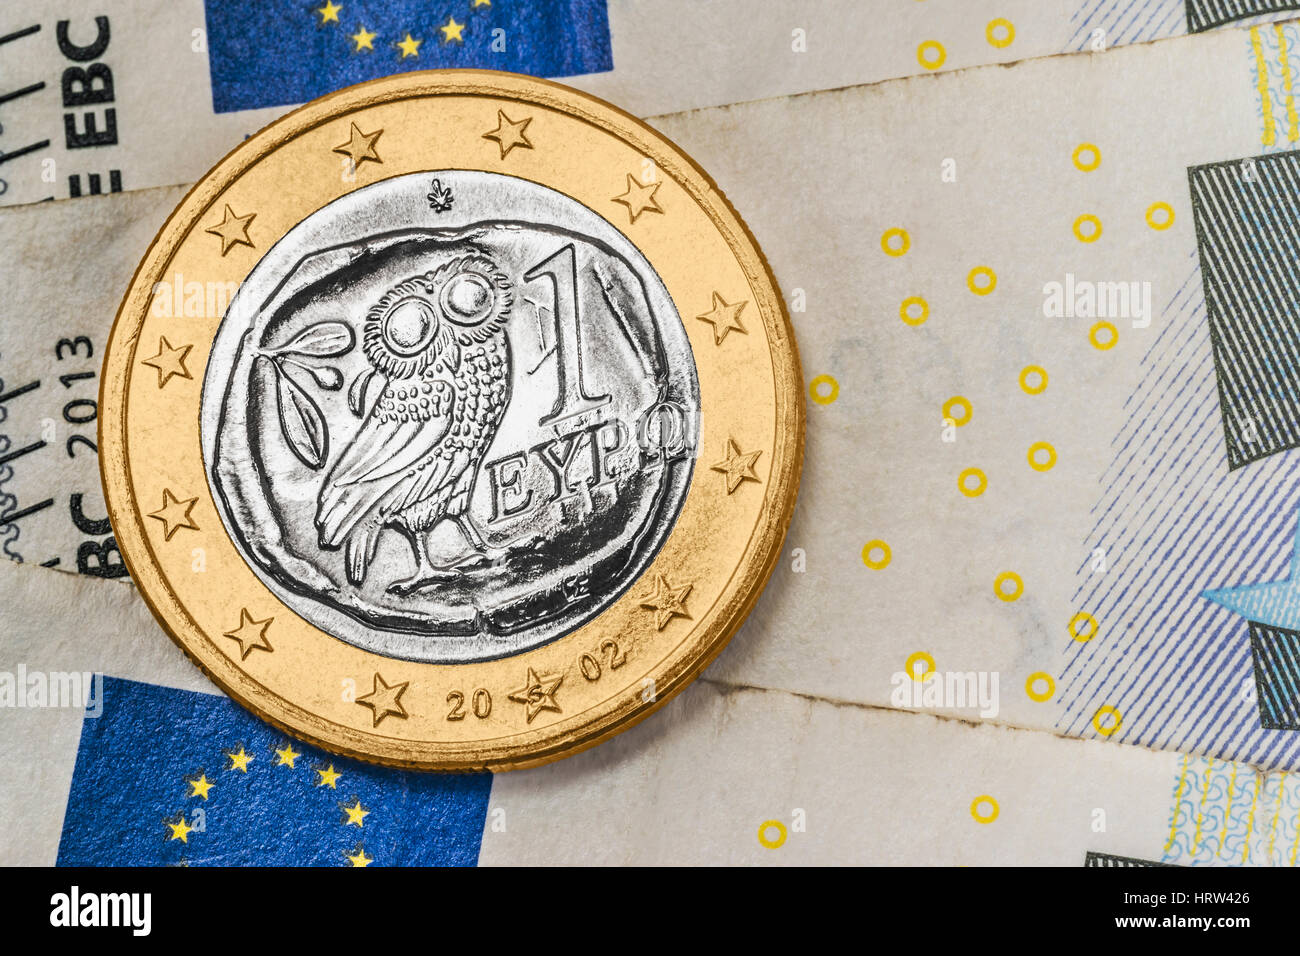 a 1 euro coin from Greece on euro banknotes Stock Photo